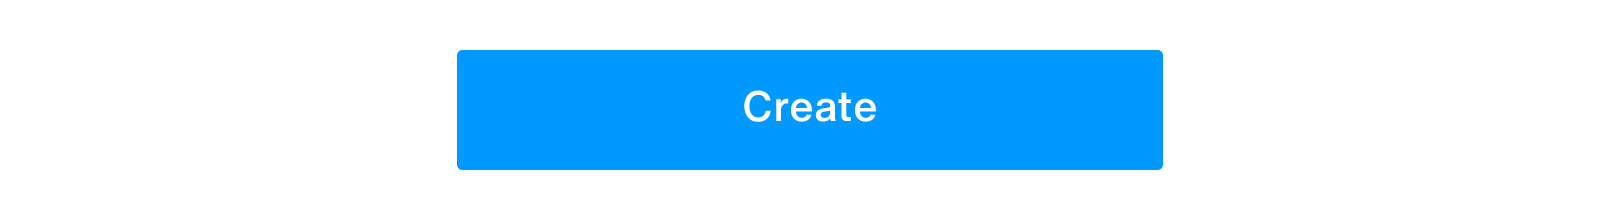 create button_01